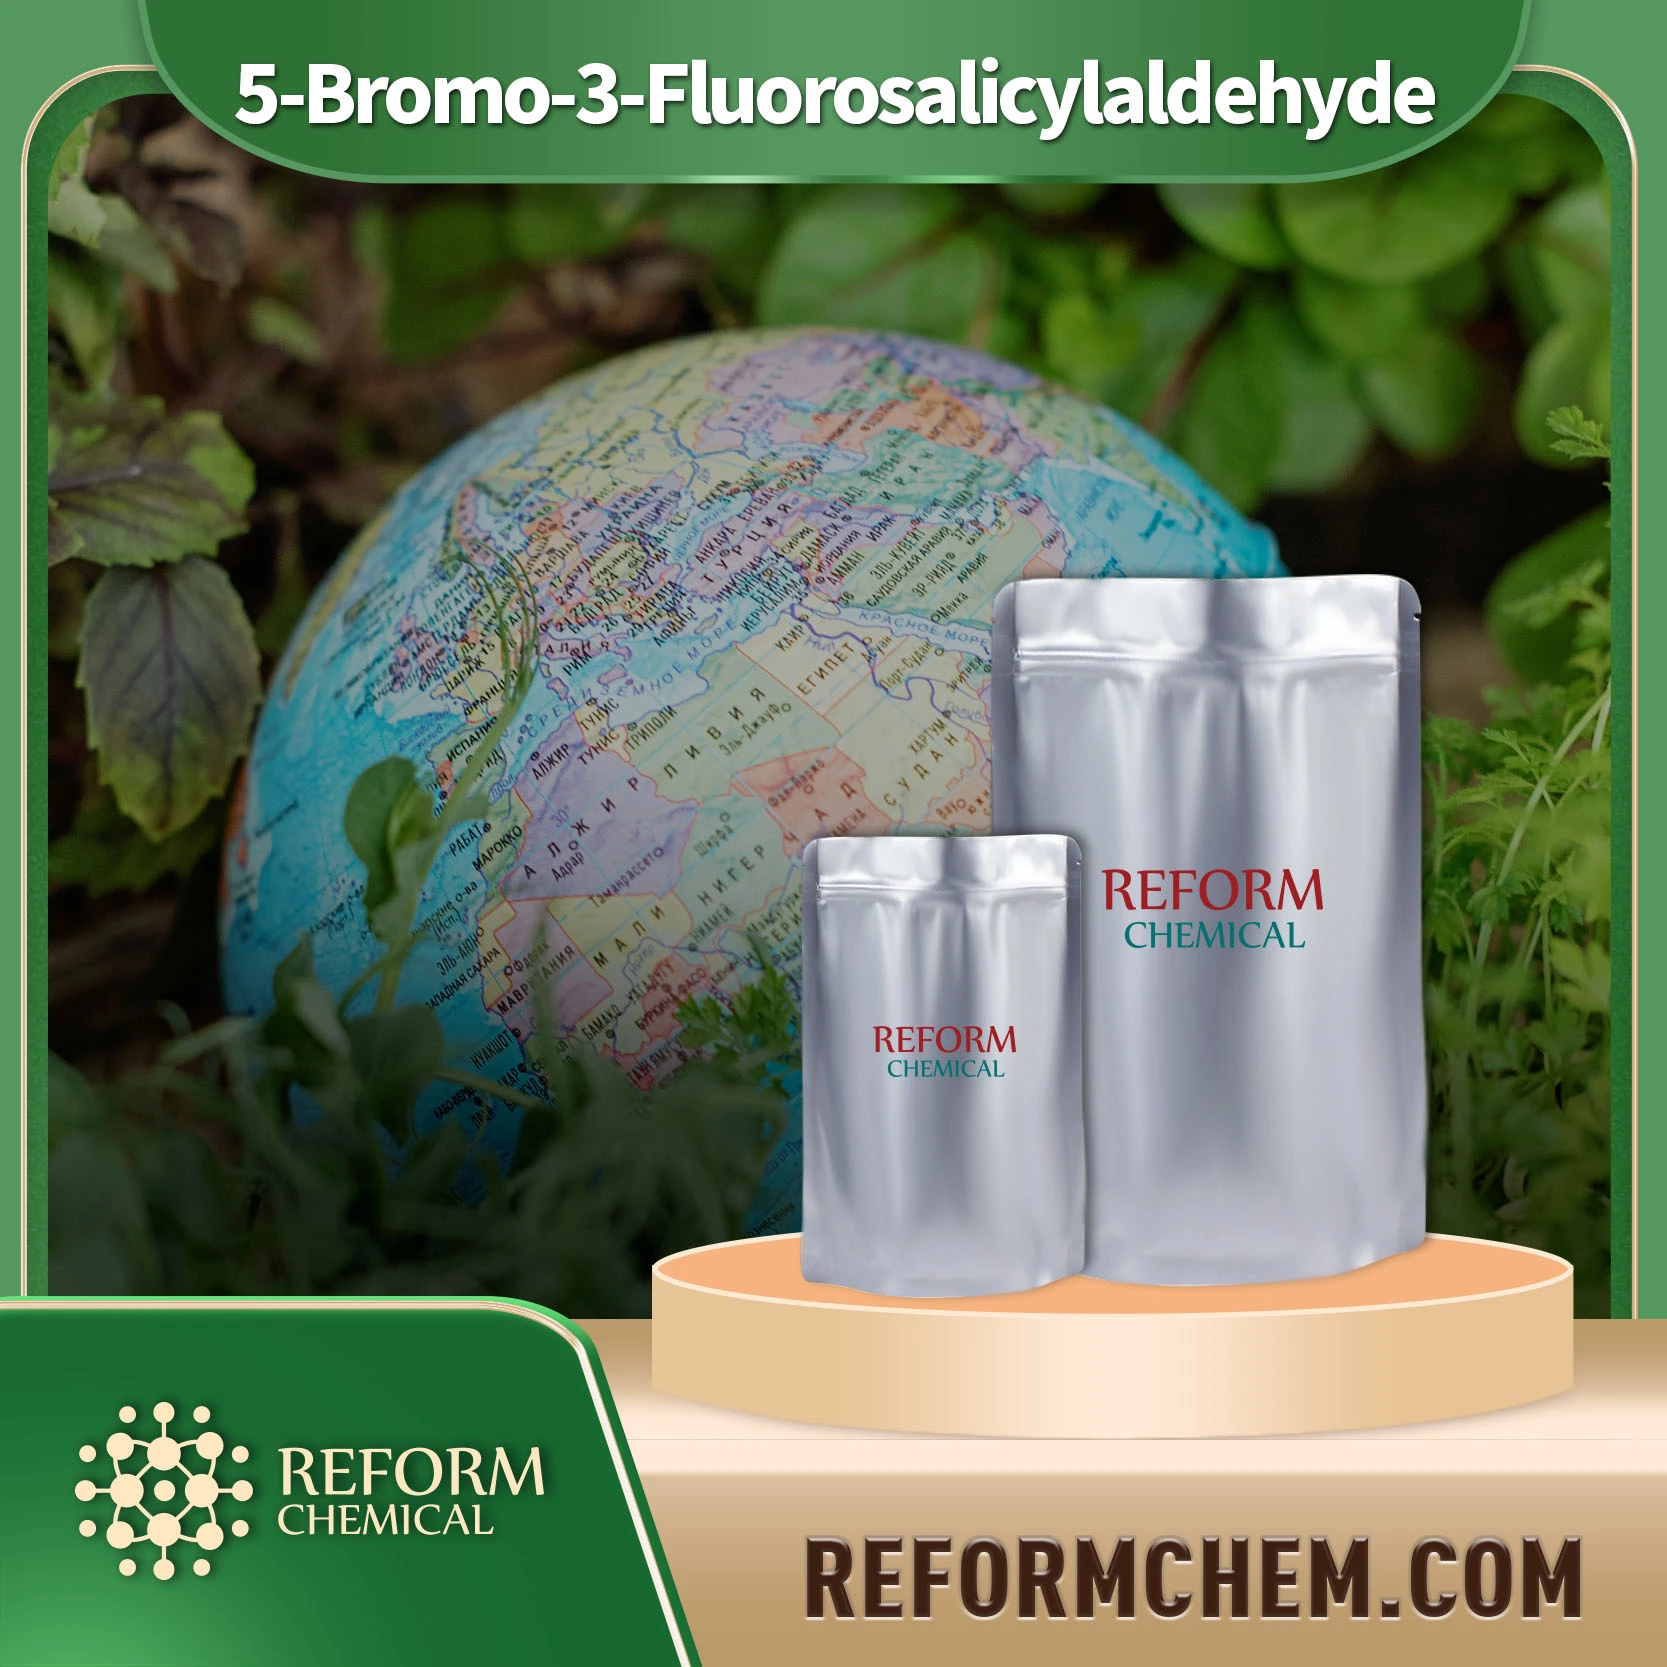 5-Bromo-3-Fluorosalicylaldehyde